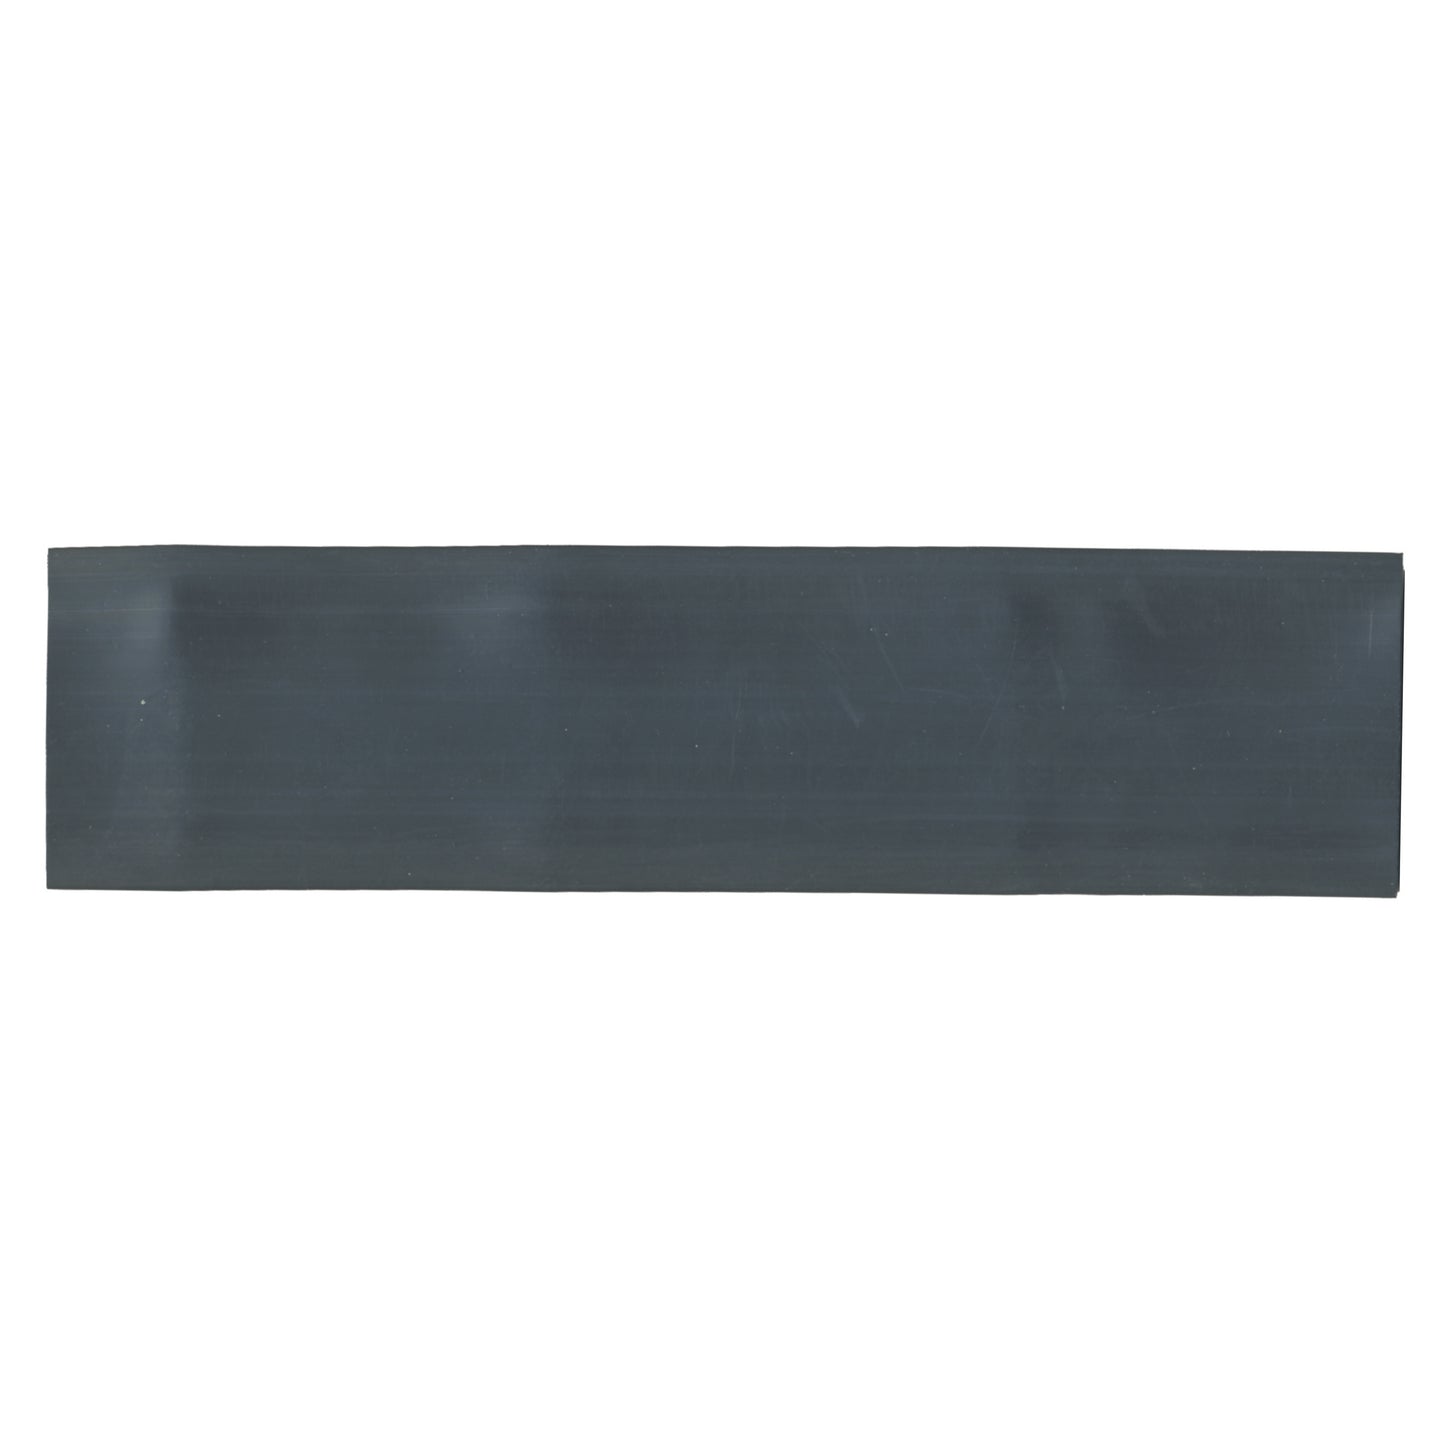 Flexible Thin Single Wall Non-Adhesive Heat Shrink Tubing 2:1 Black 1" ID - 12" Inch 10 Pack